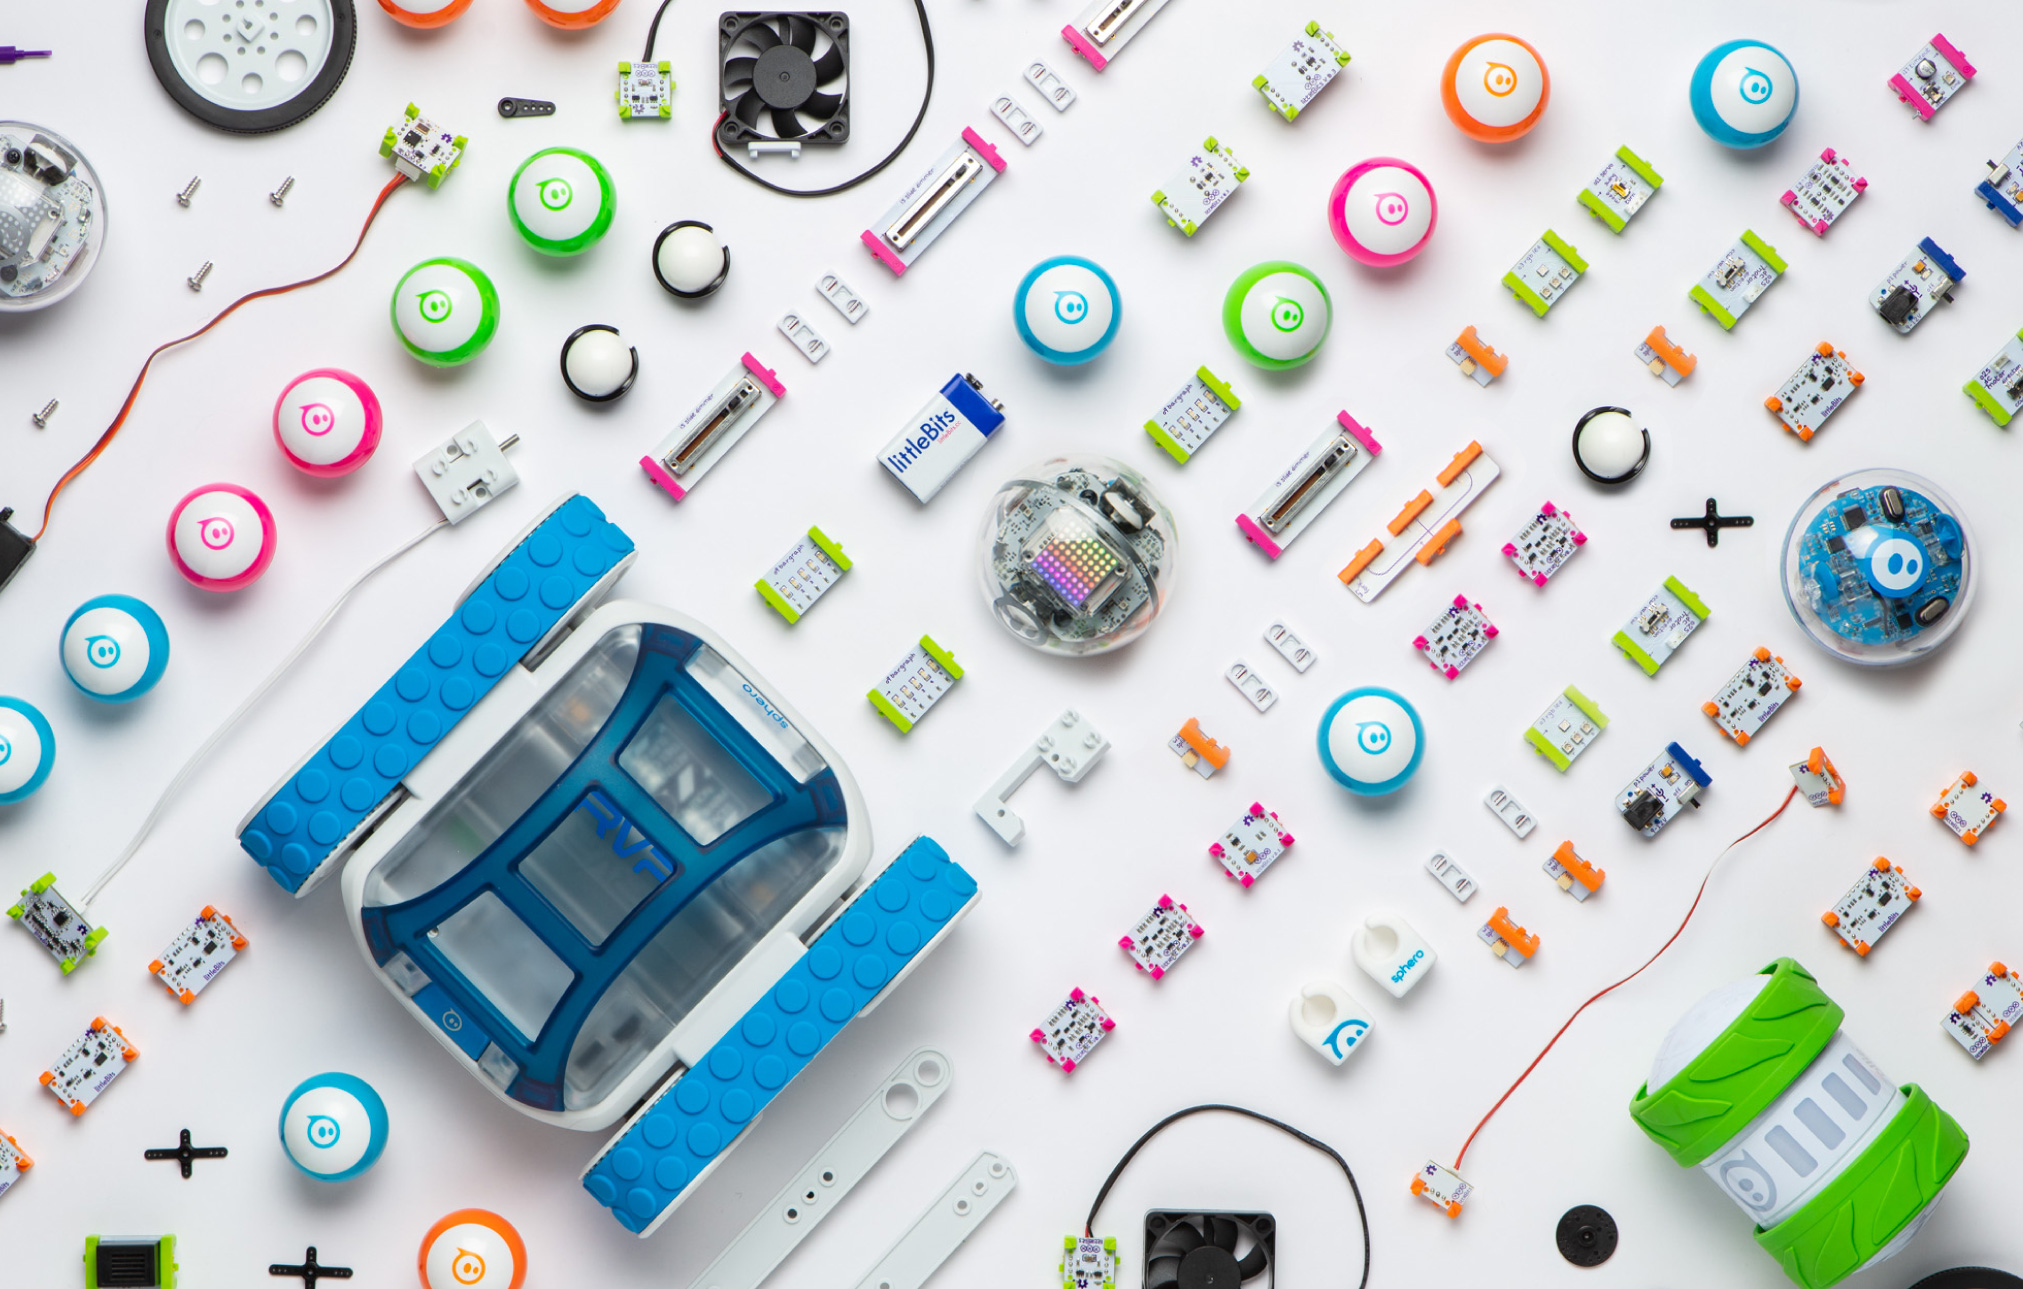 Sphero-littleBits-flat lay still life knolling studio phot0